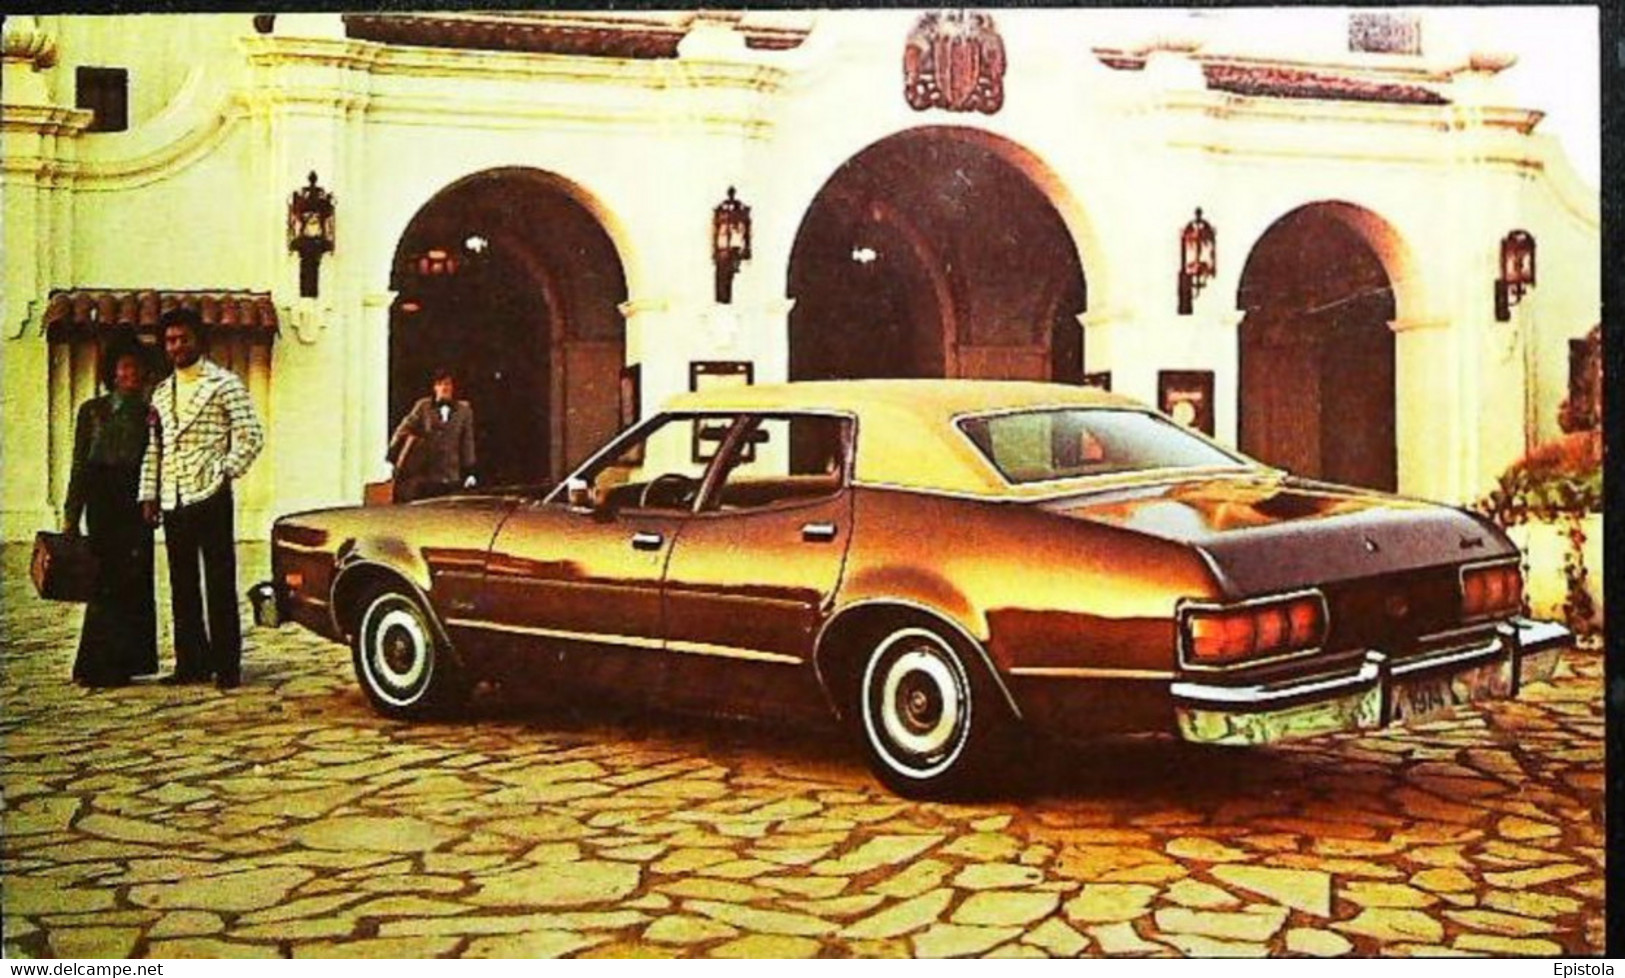 ► MERCURY Zephyr  1974 - Don KREMER Garage Dayton OHIO  - Automobile Publicity  (Litho.U.S.A) - Roadside - American Roadside